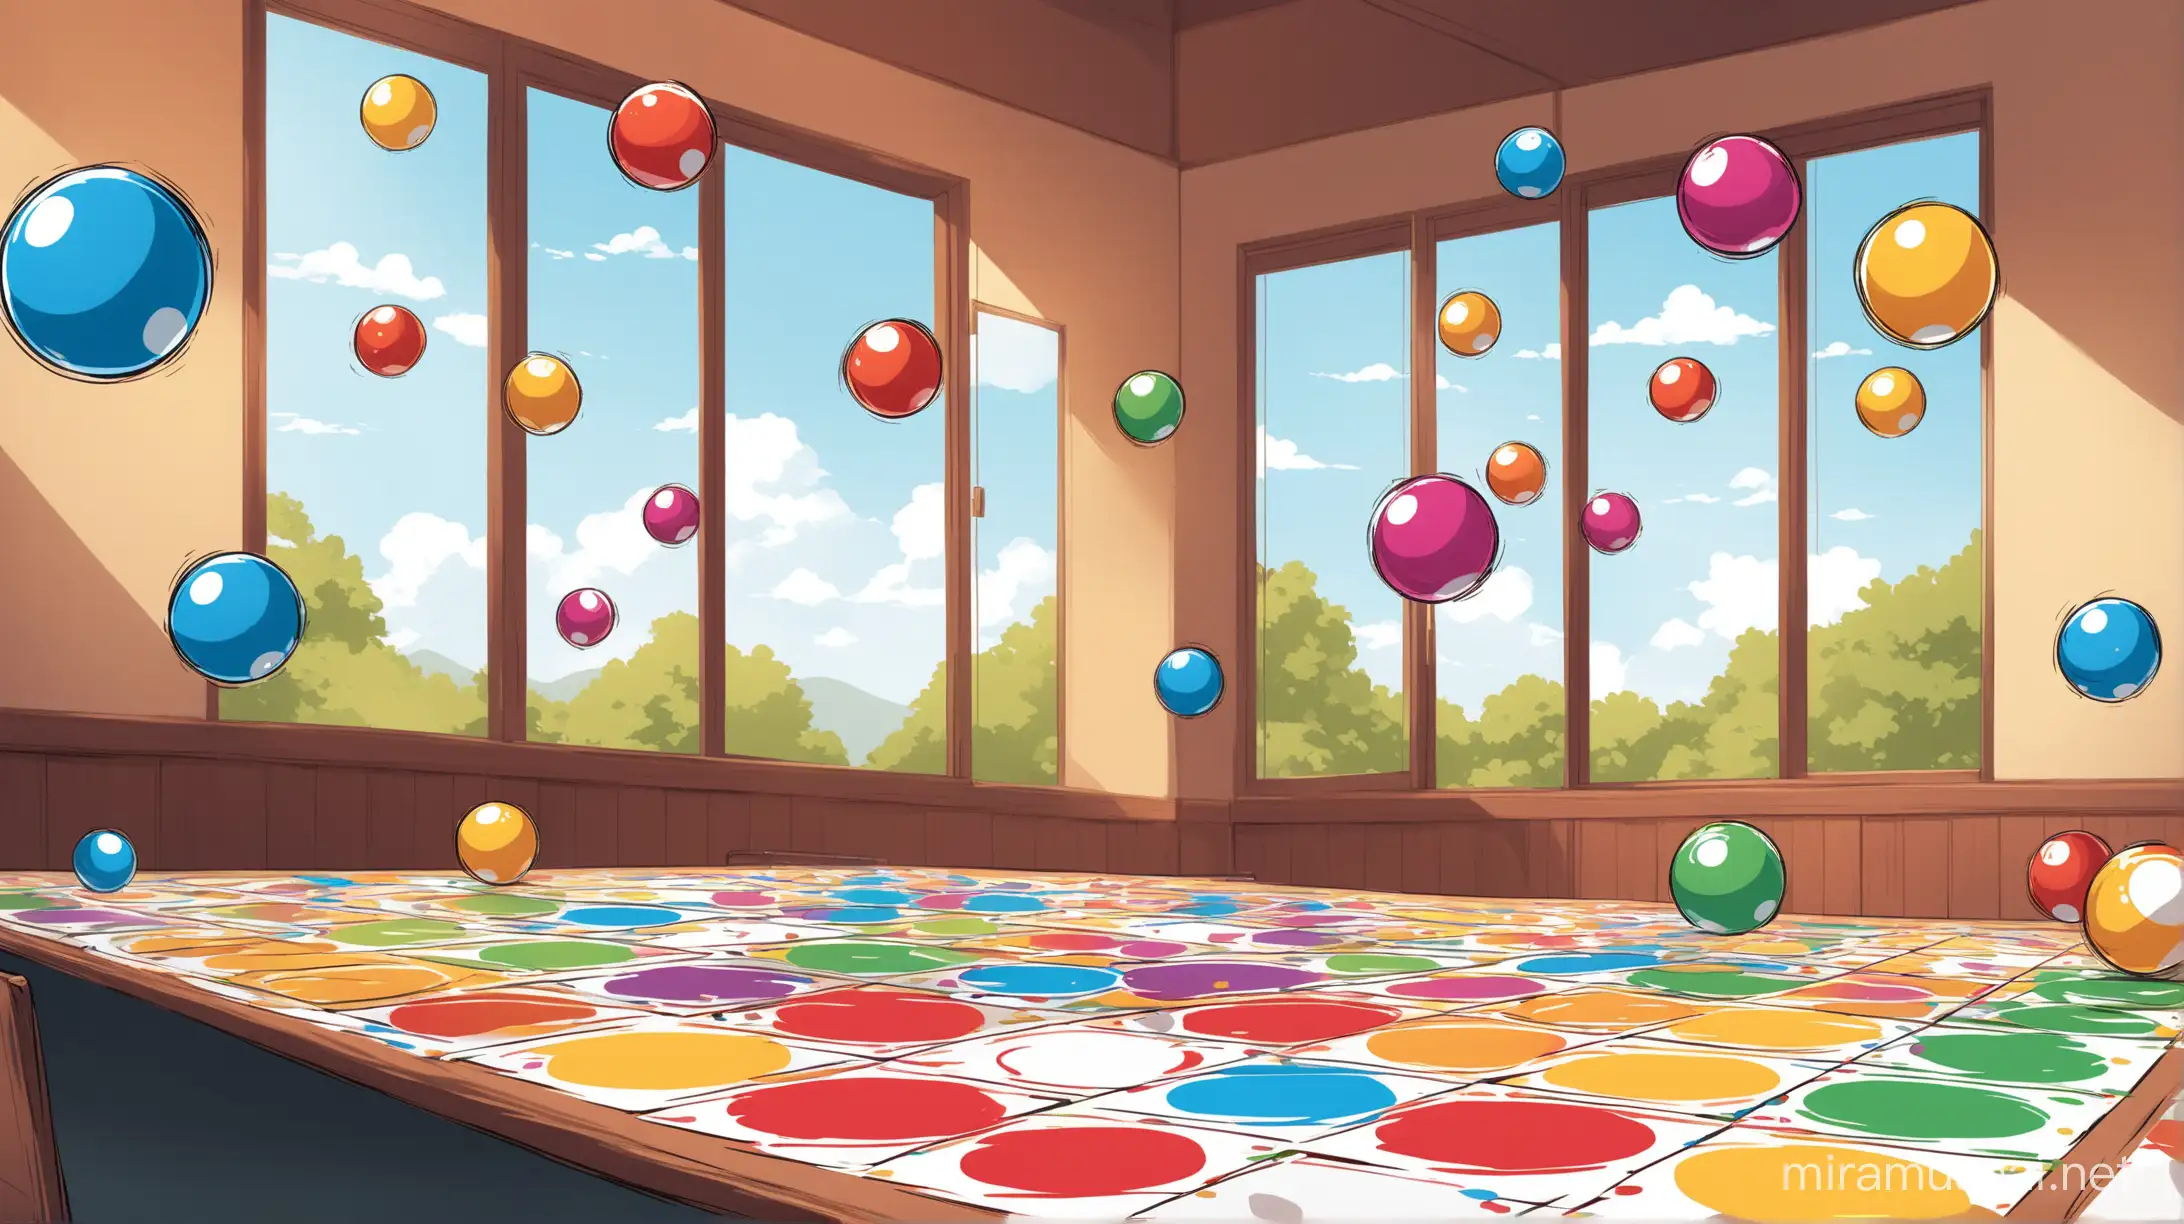 Bingo balls flying minimalistic  spread illustration in the environment, indoor  background cartoonist images